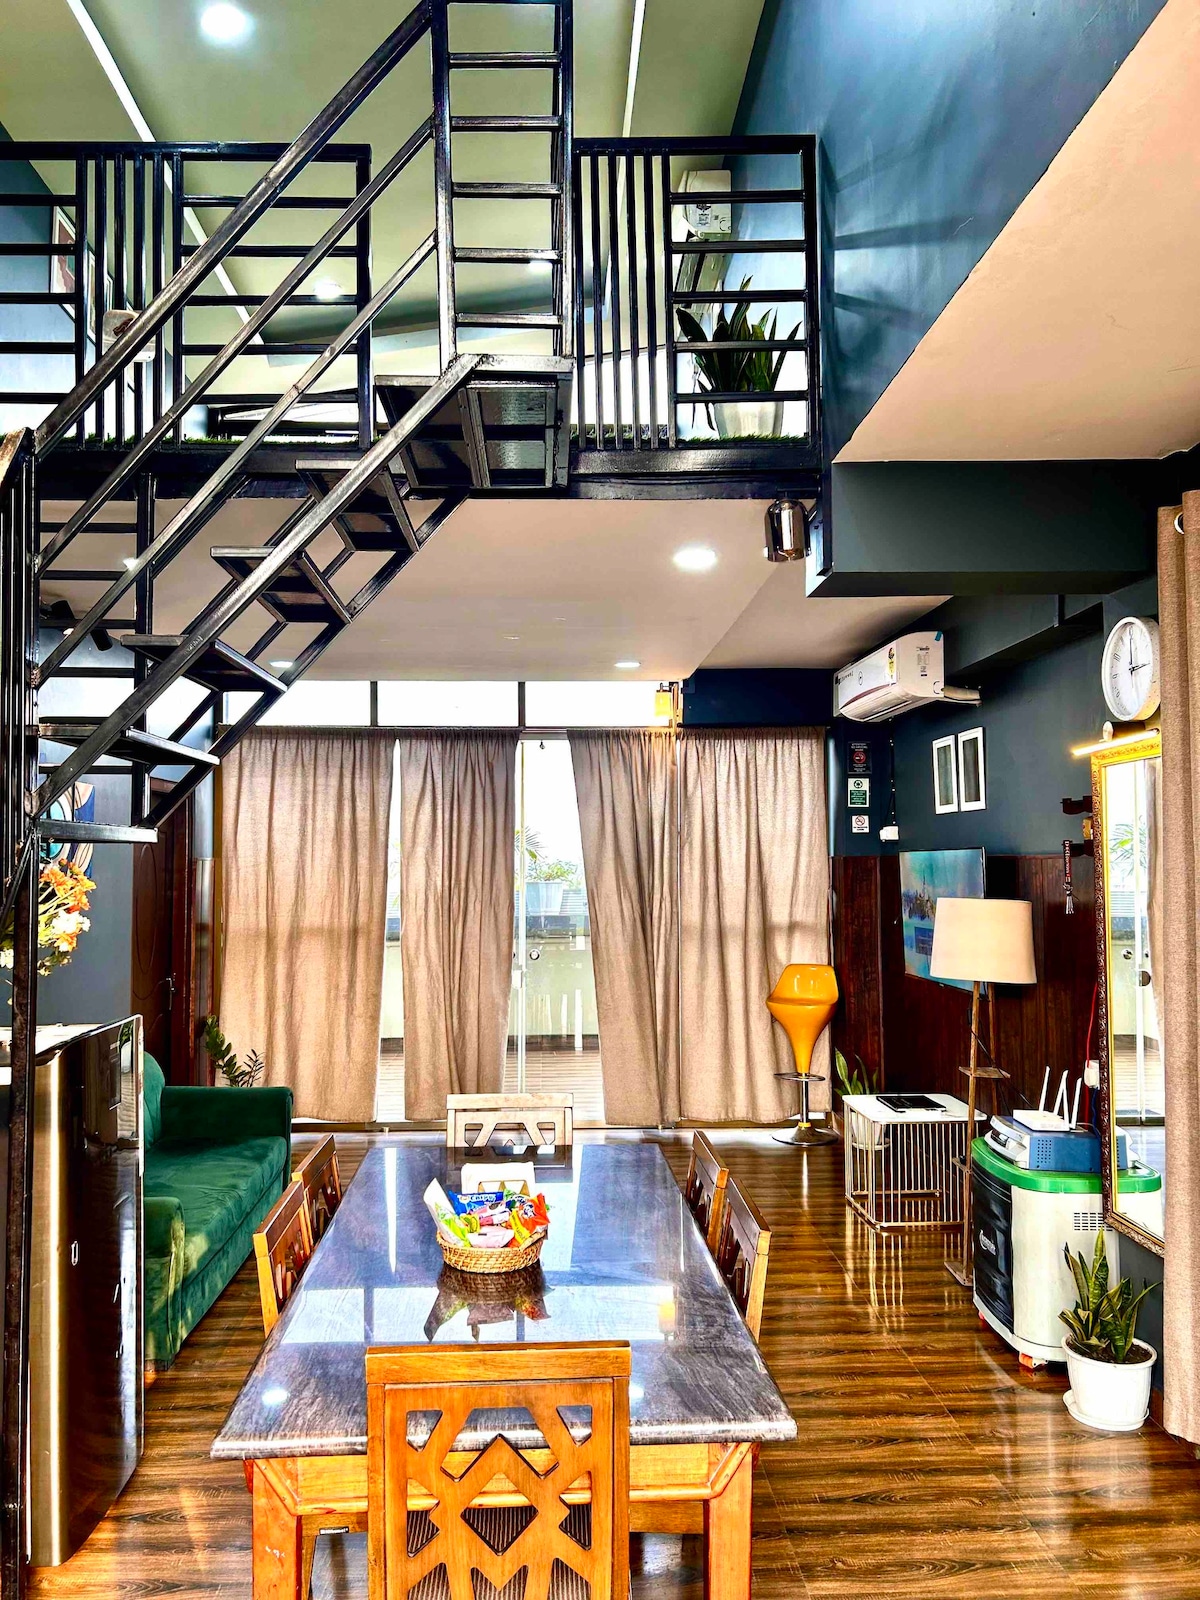 The Loft House: Studio inspired Loft apartment